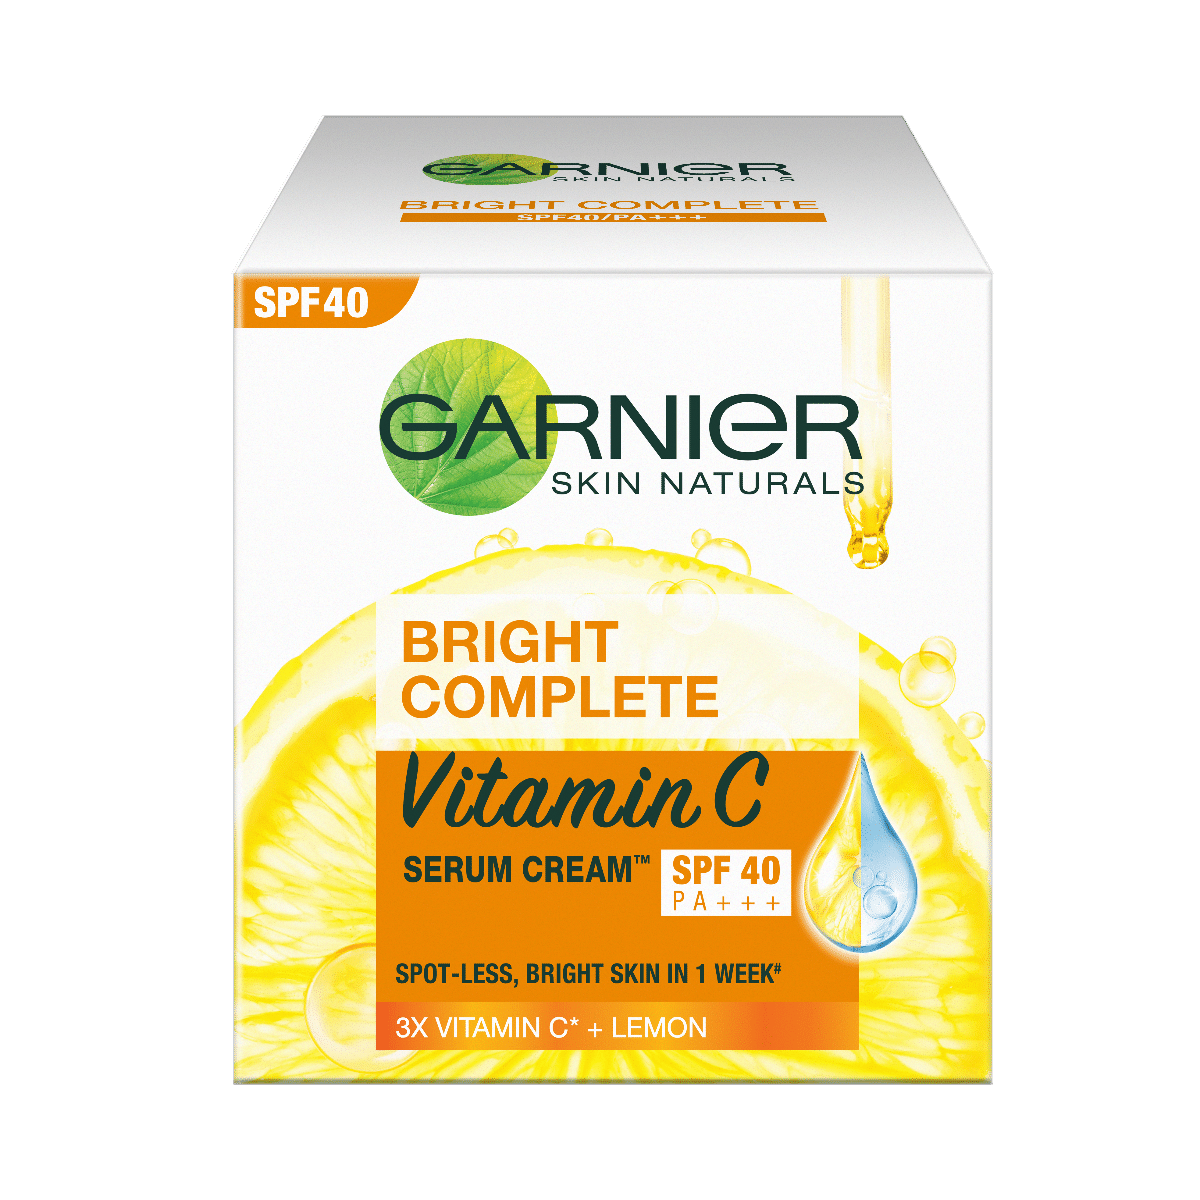 Garnier Bright Complete Vitamin C Spf 40 Pa Serum Cream 45 Gm Price Uses Side Effects Composition Apollo Pharmacy